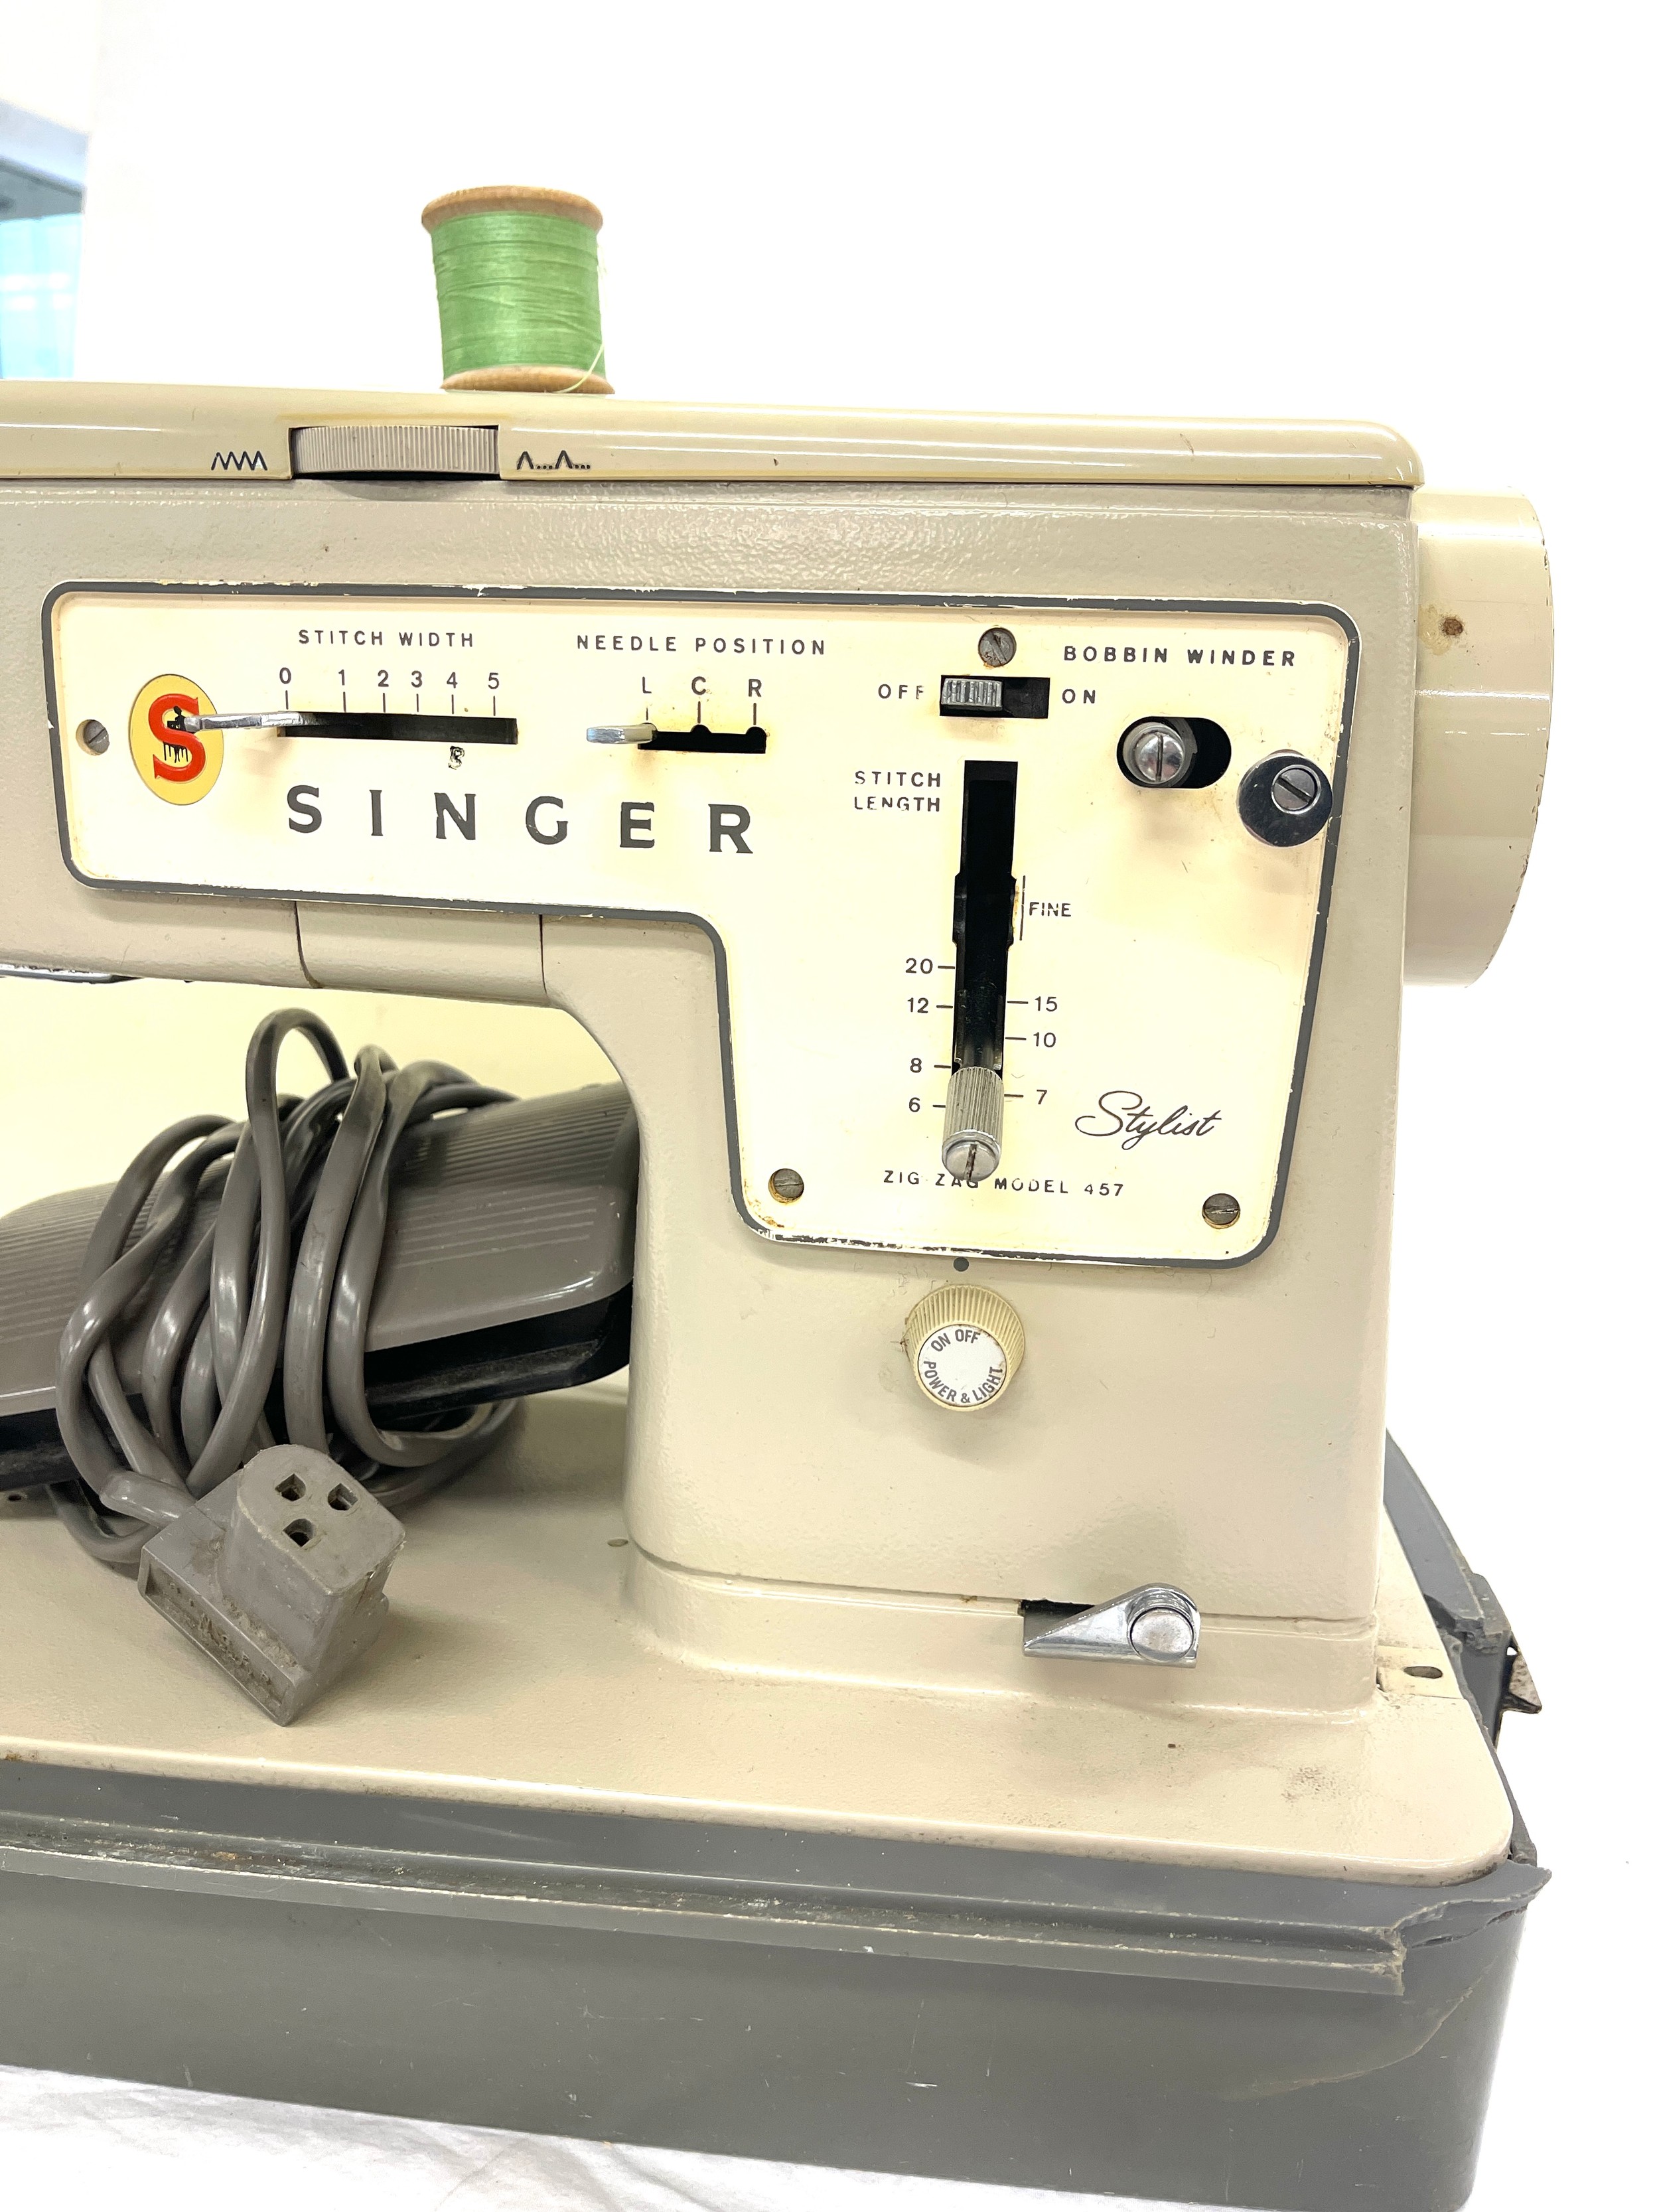 1960s cased singer zig zag model 457 sewing machine - Image 2 of 4